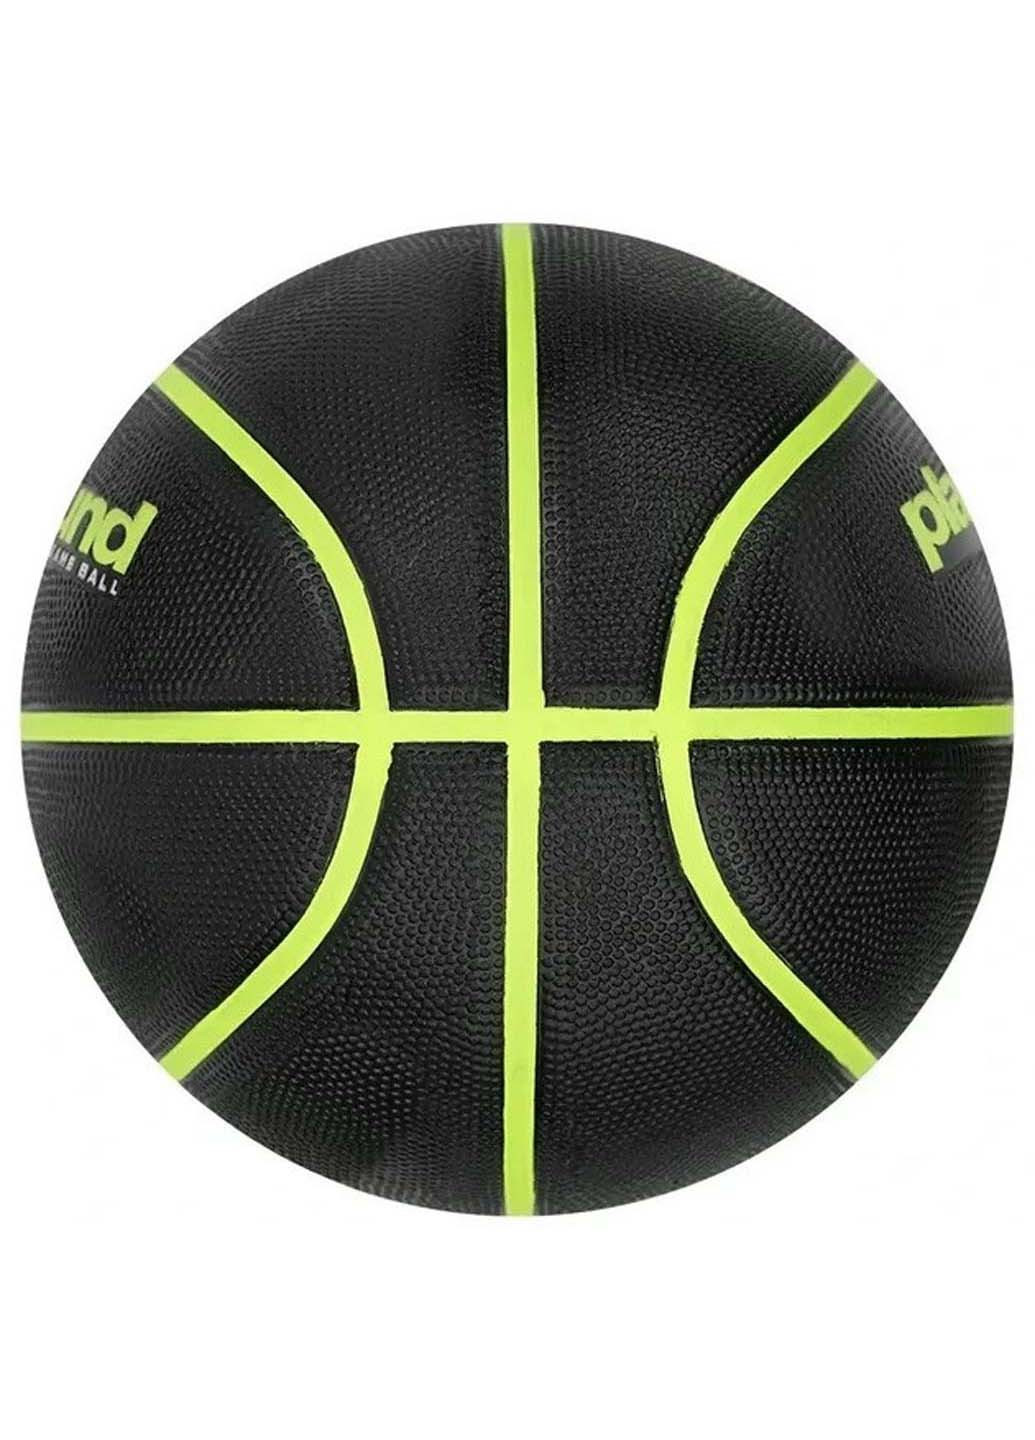 М'яч баскетбольний Everyday Playground 8P Deflated Size 6 Nike (257607064)